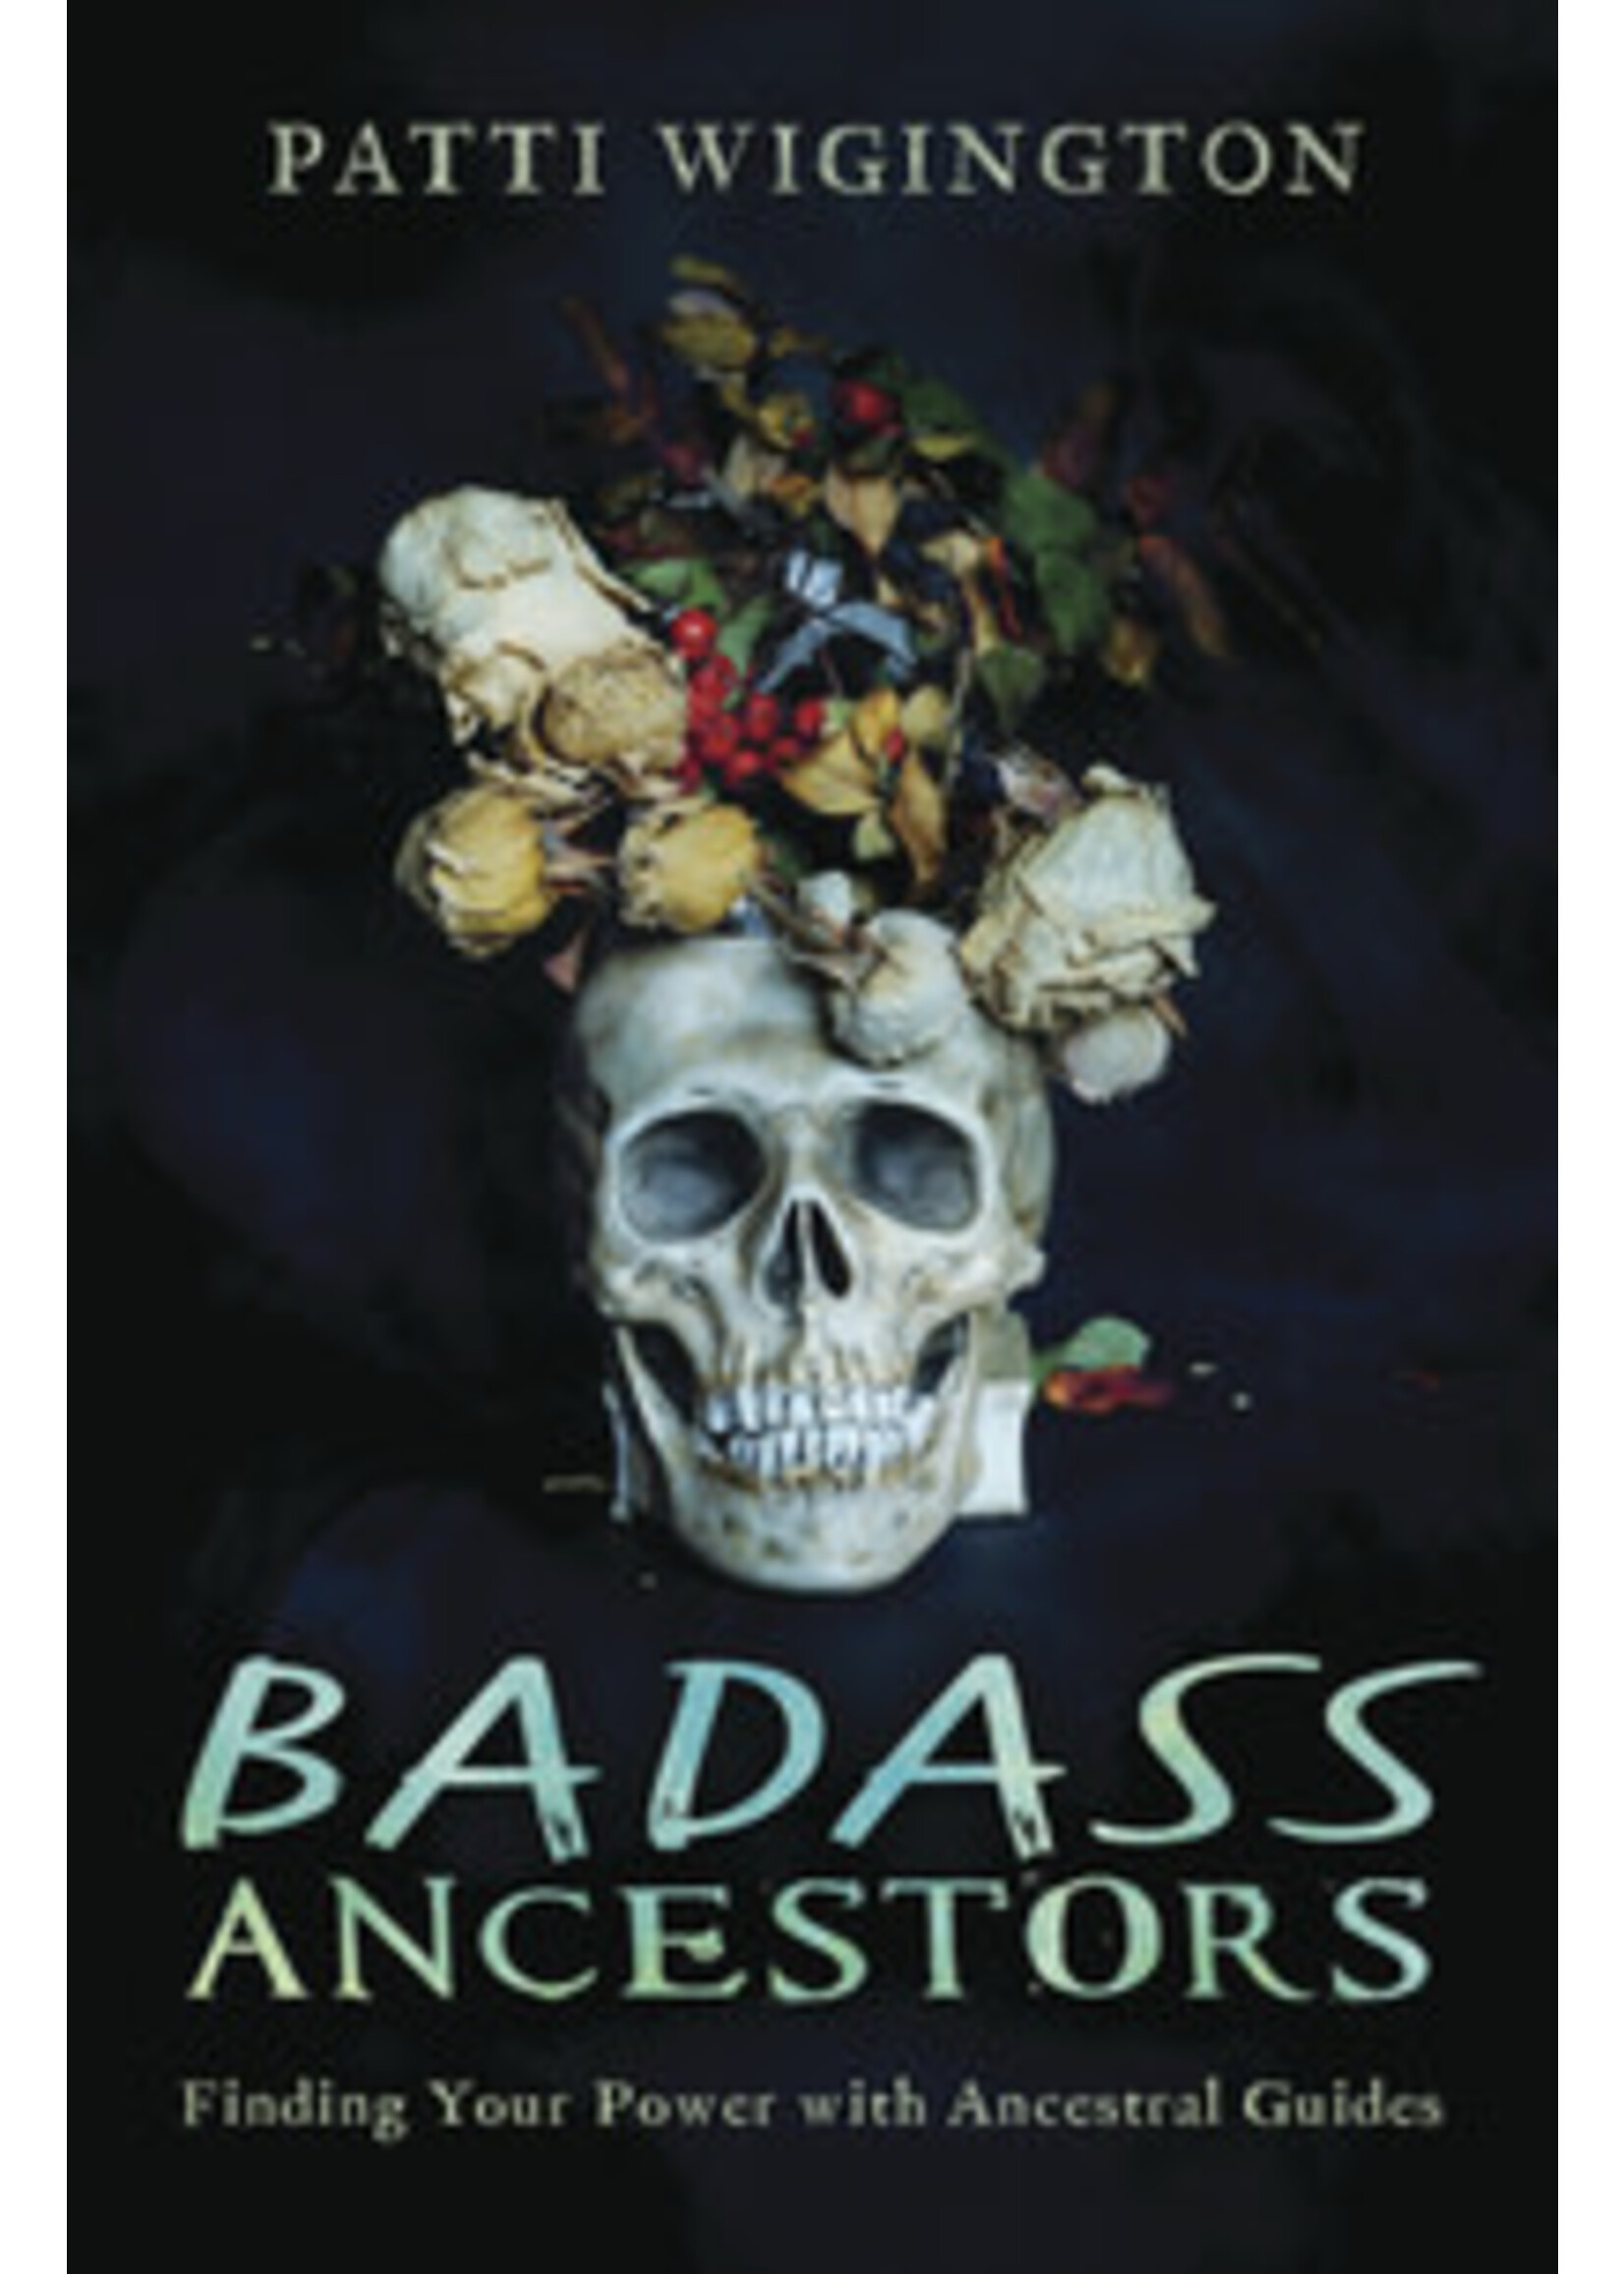 Badass Ancestors by Patti Wigington